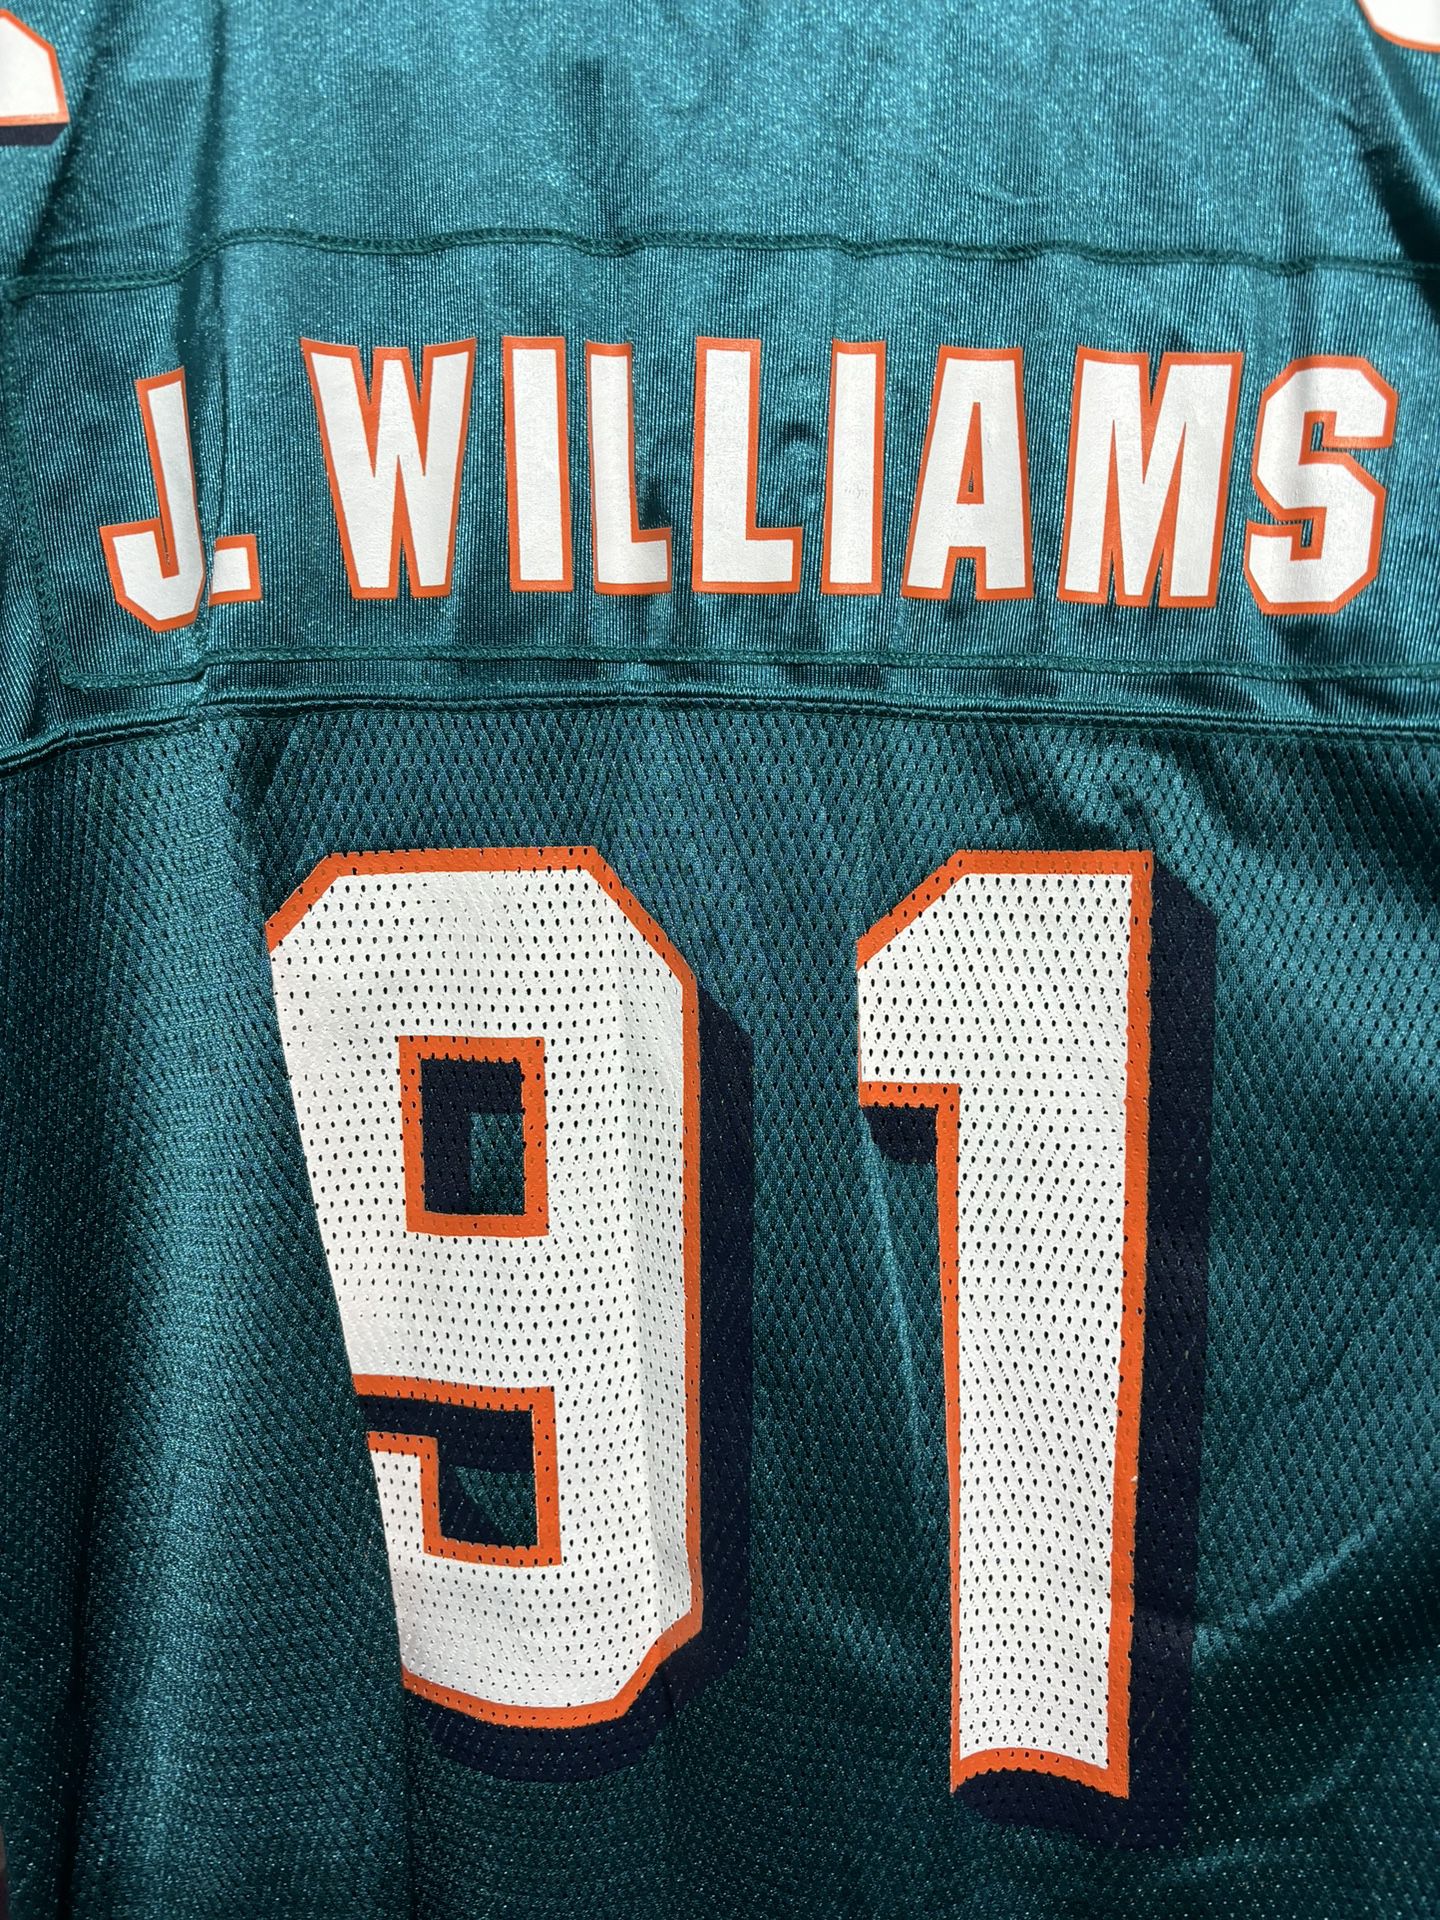 J Williams Miami Dolphins NFL Reebok football jersey, men XL